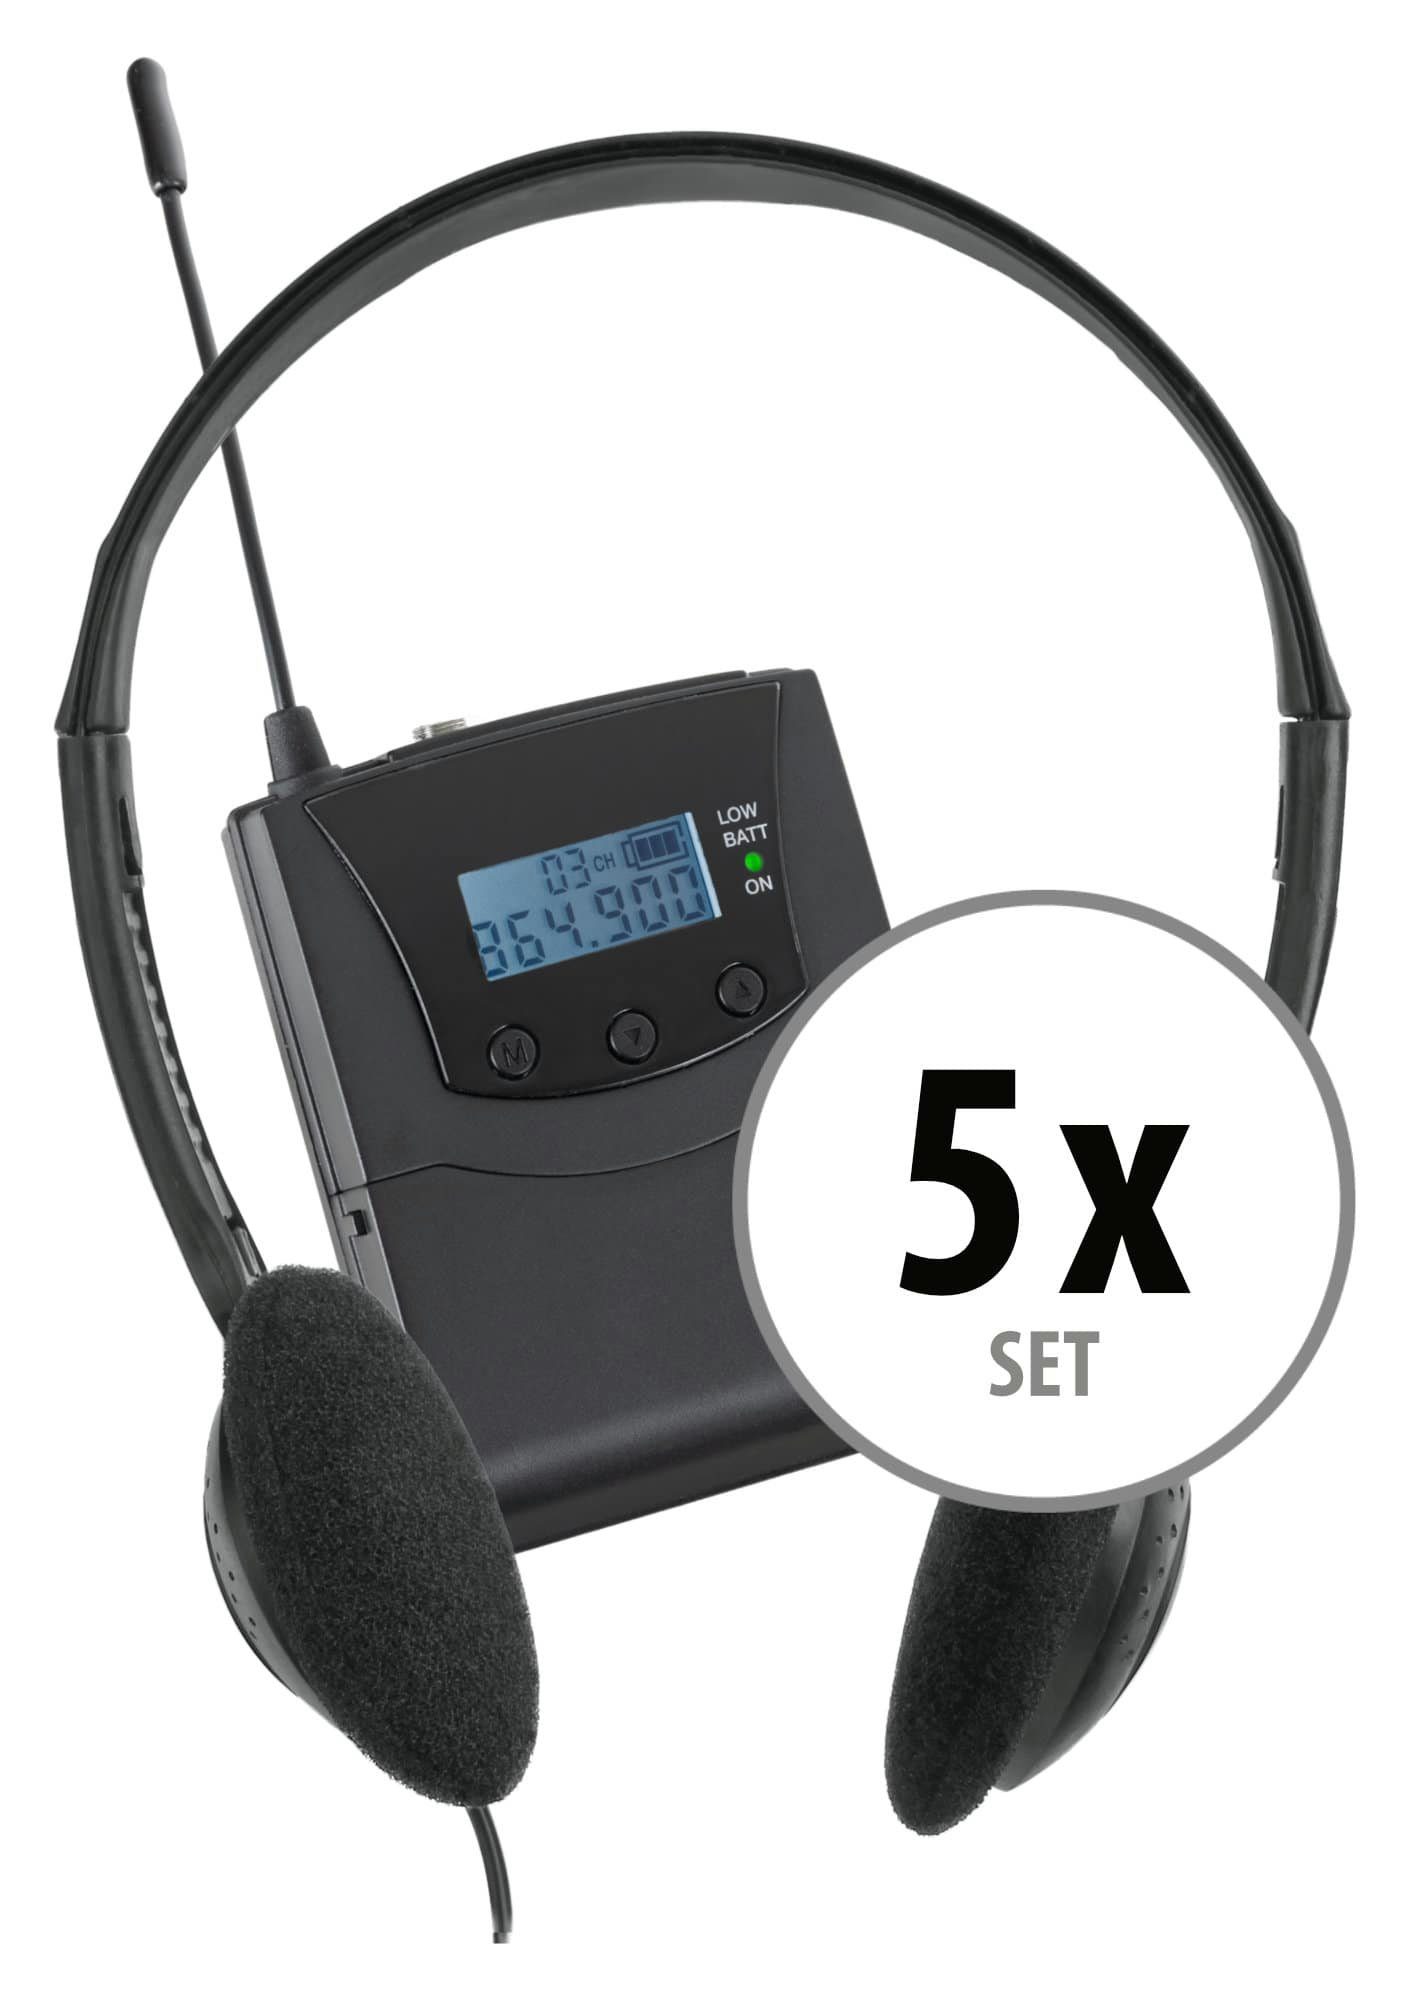 5 Kanäle (Dezentes empfangbare 5 Stereo Kopfhörer) Silent inkl. mit UHF-Technik, Bodypack-Receiver Funk-Empfänger, 3 V2 Beatfoxx Funk-Kopfhörer Set Economy Guide Tourguide-Set